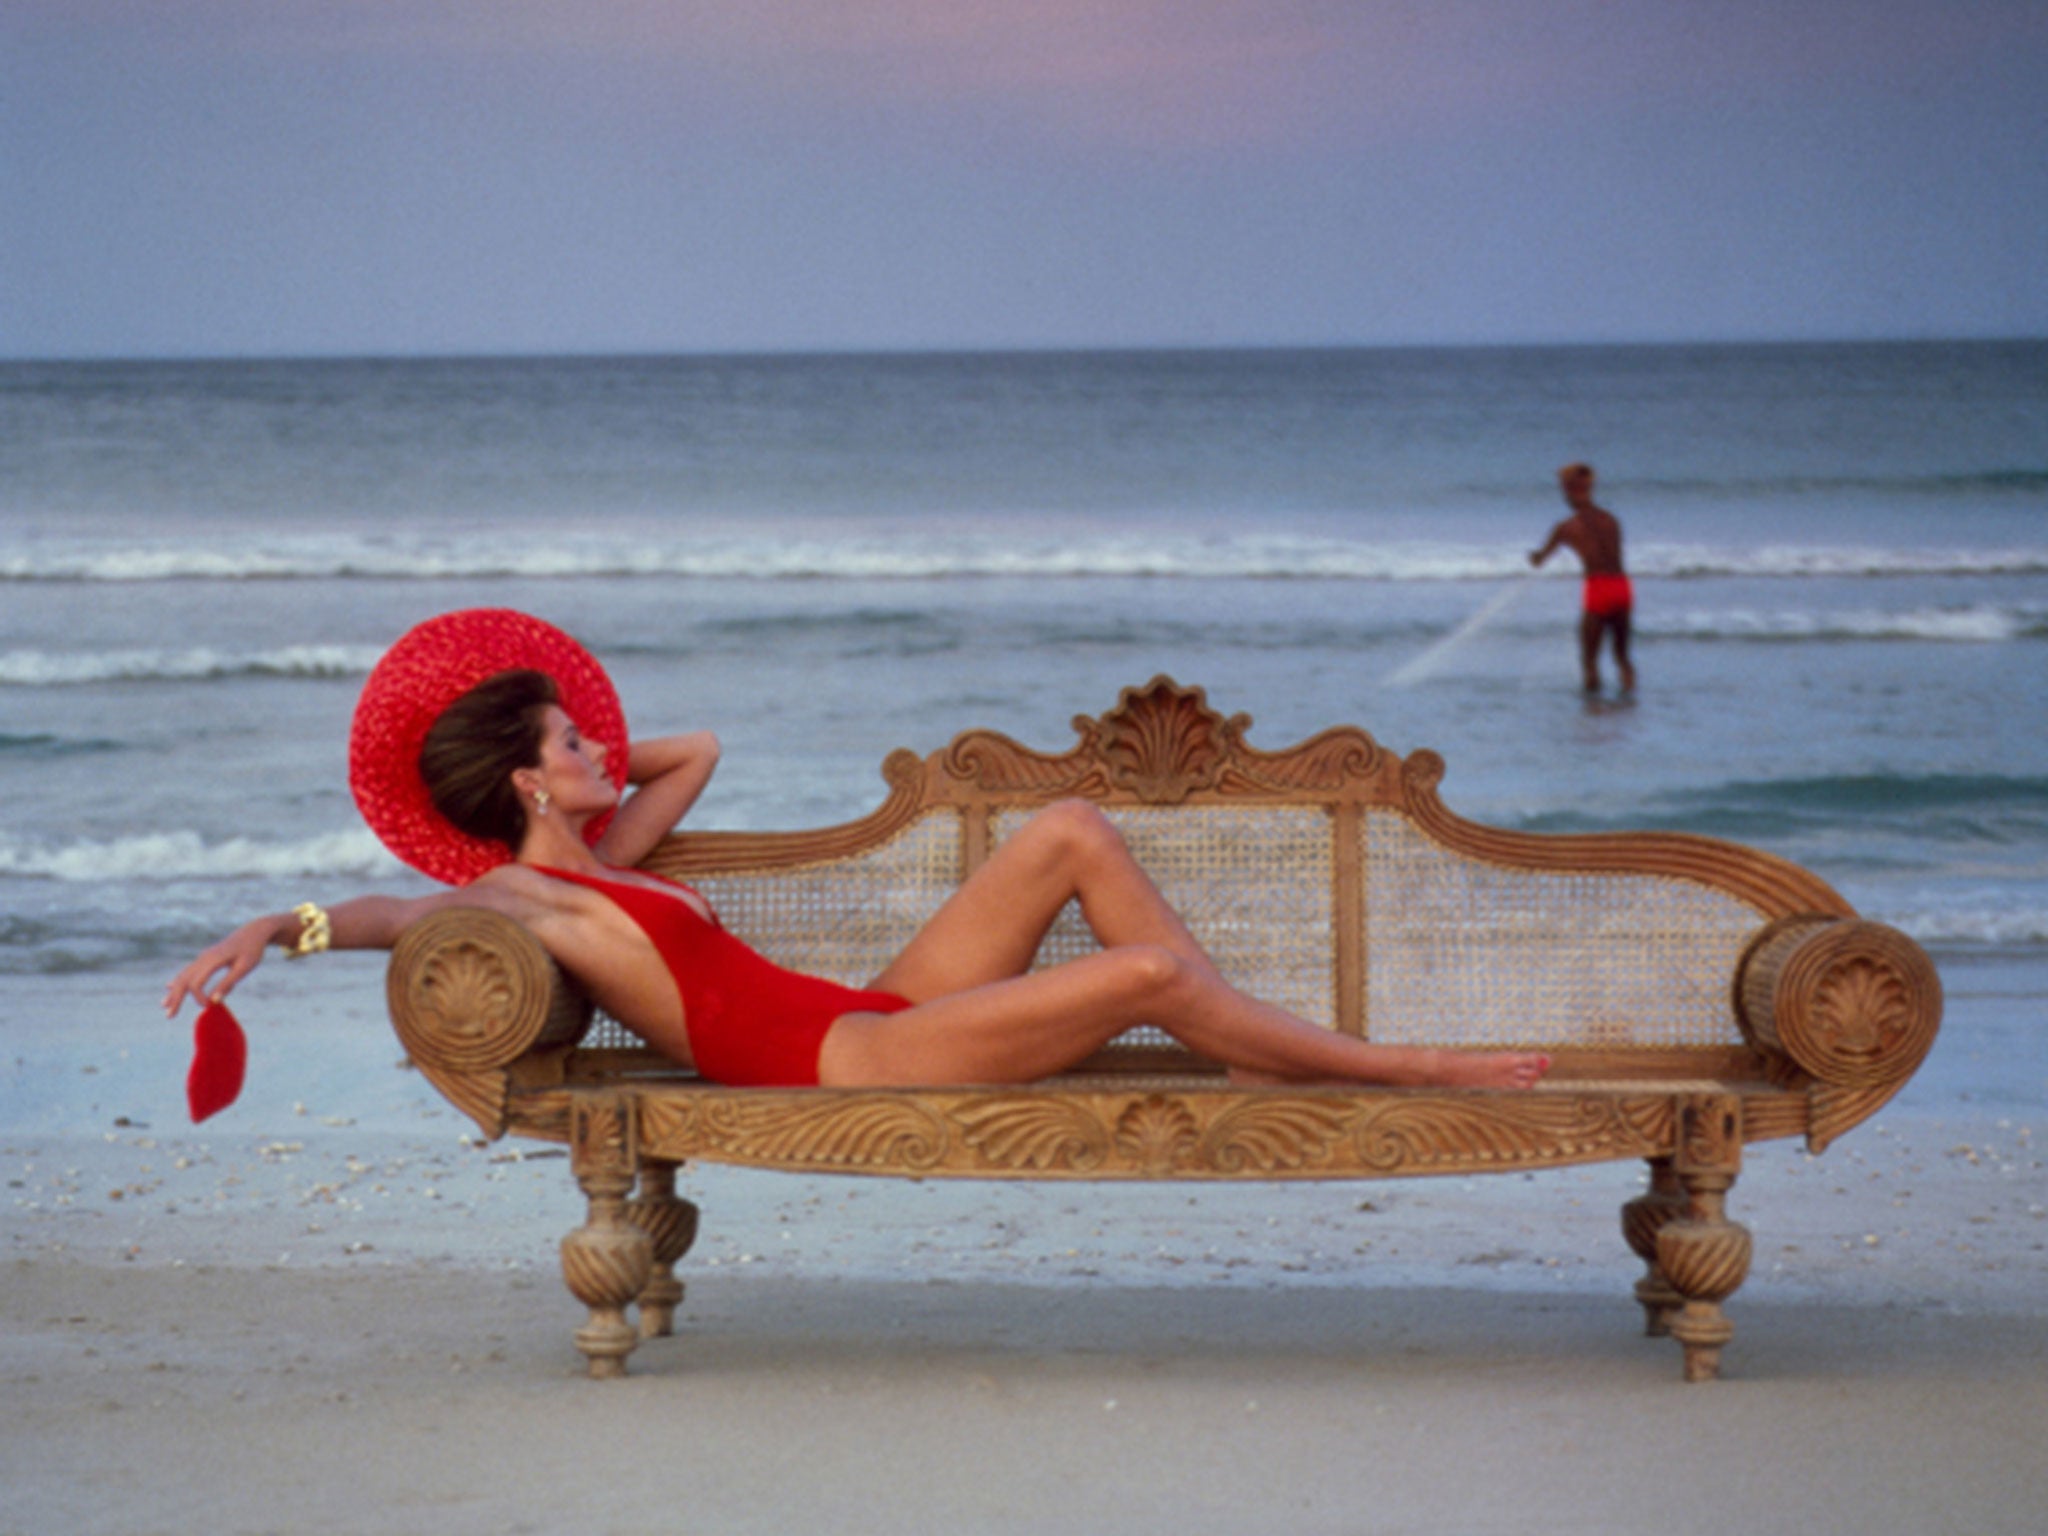 Norman Parkinson's 1980 photograph of Pilar Crespi on Trincomalee beach, Sri Lanka